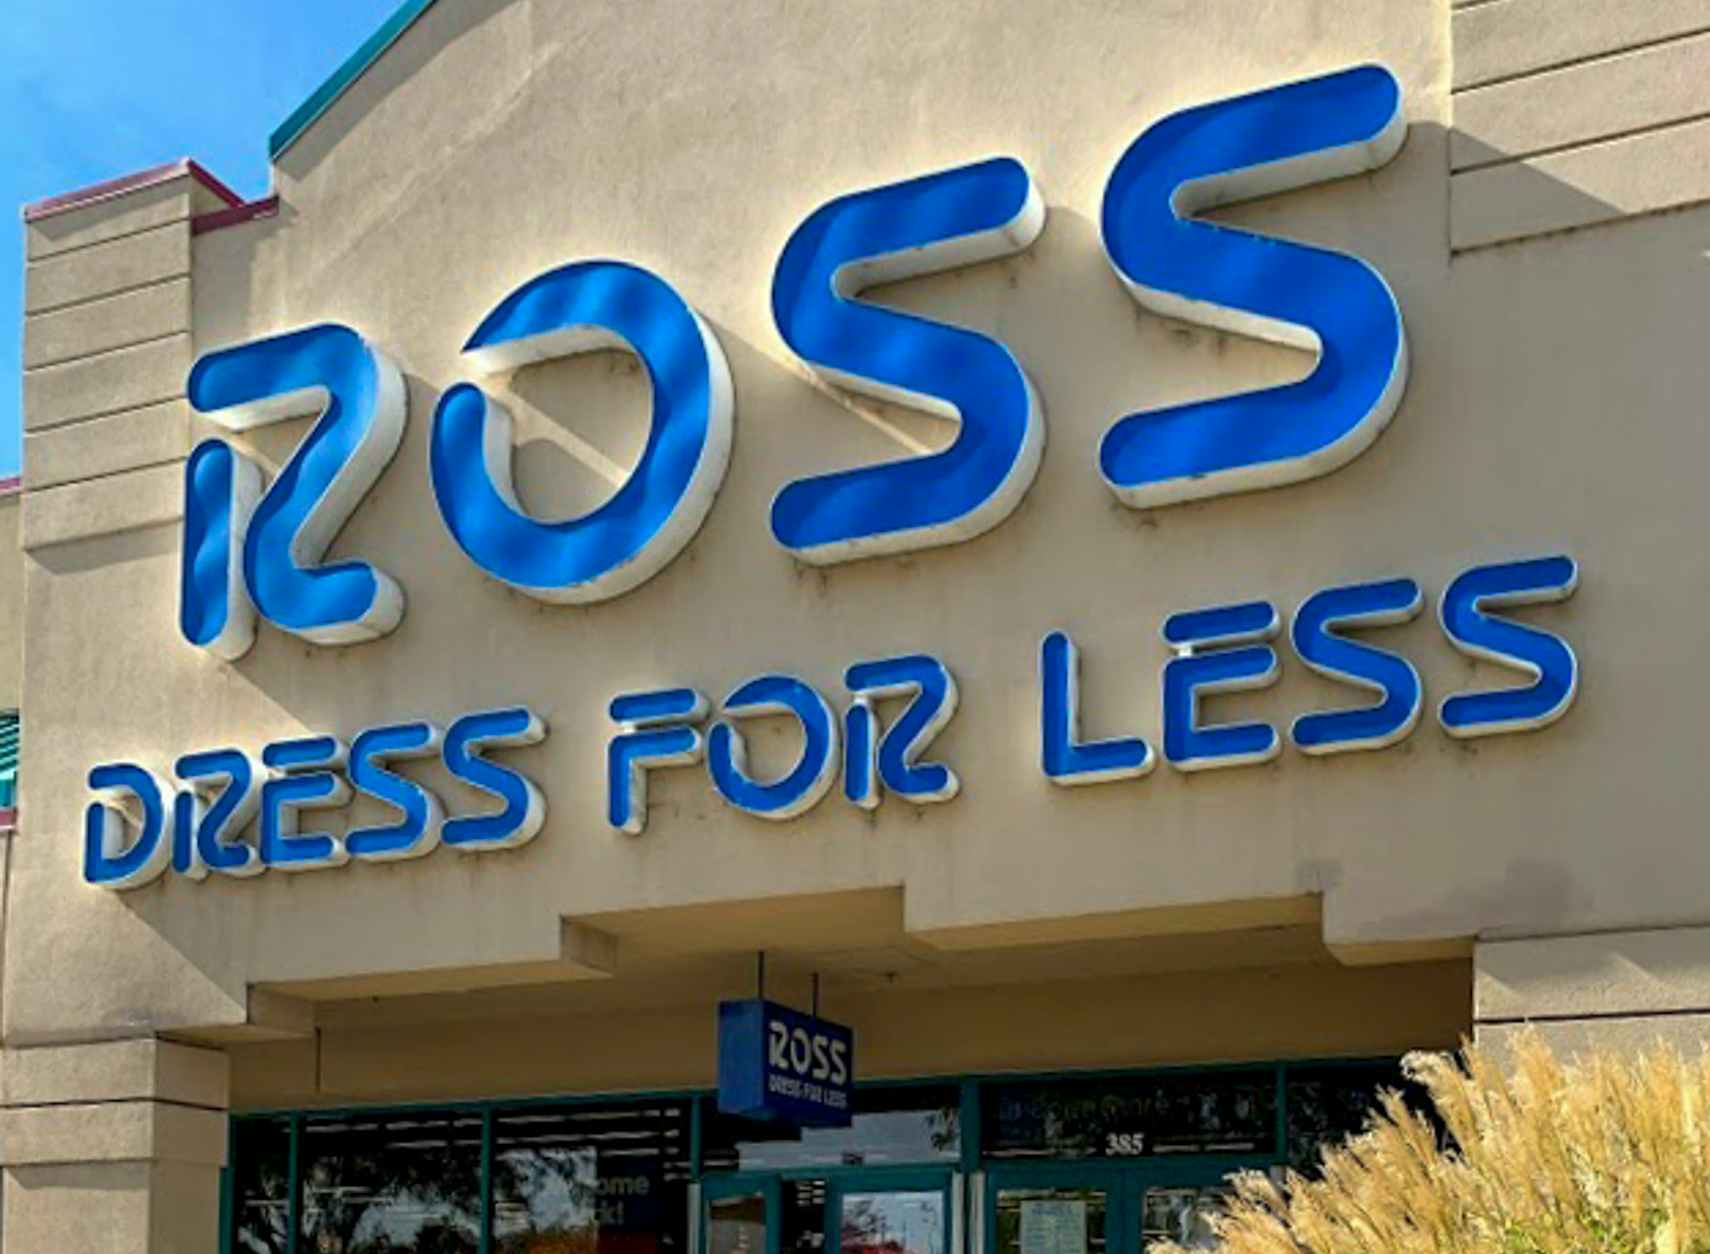 2023 Ross discount near me he get 